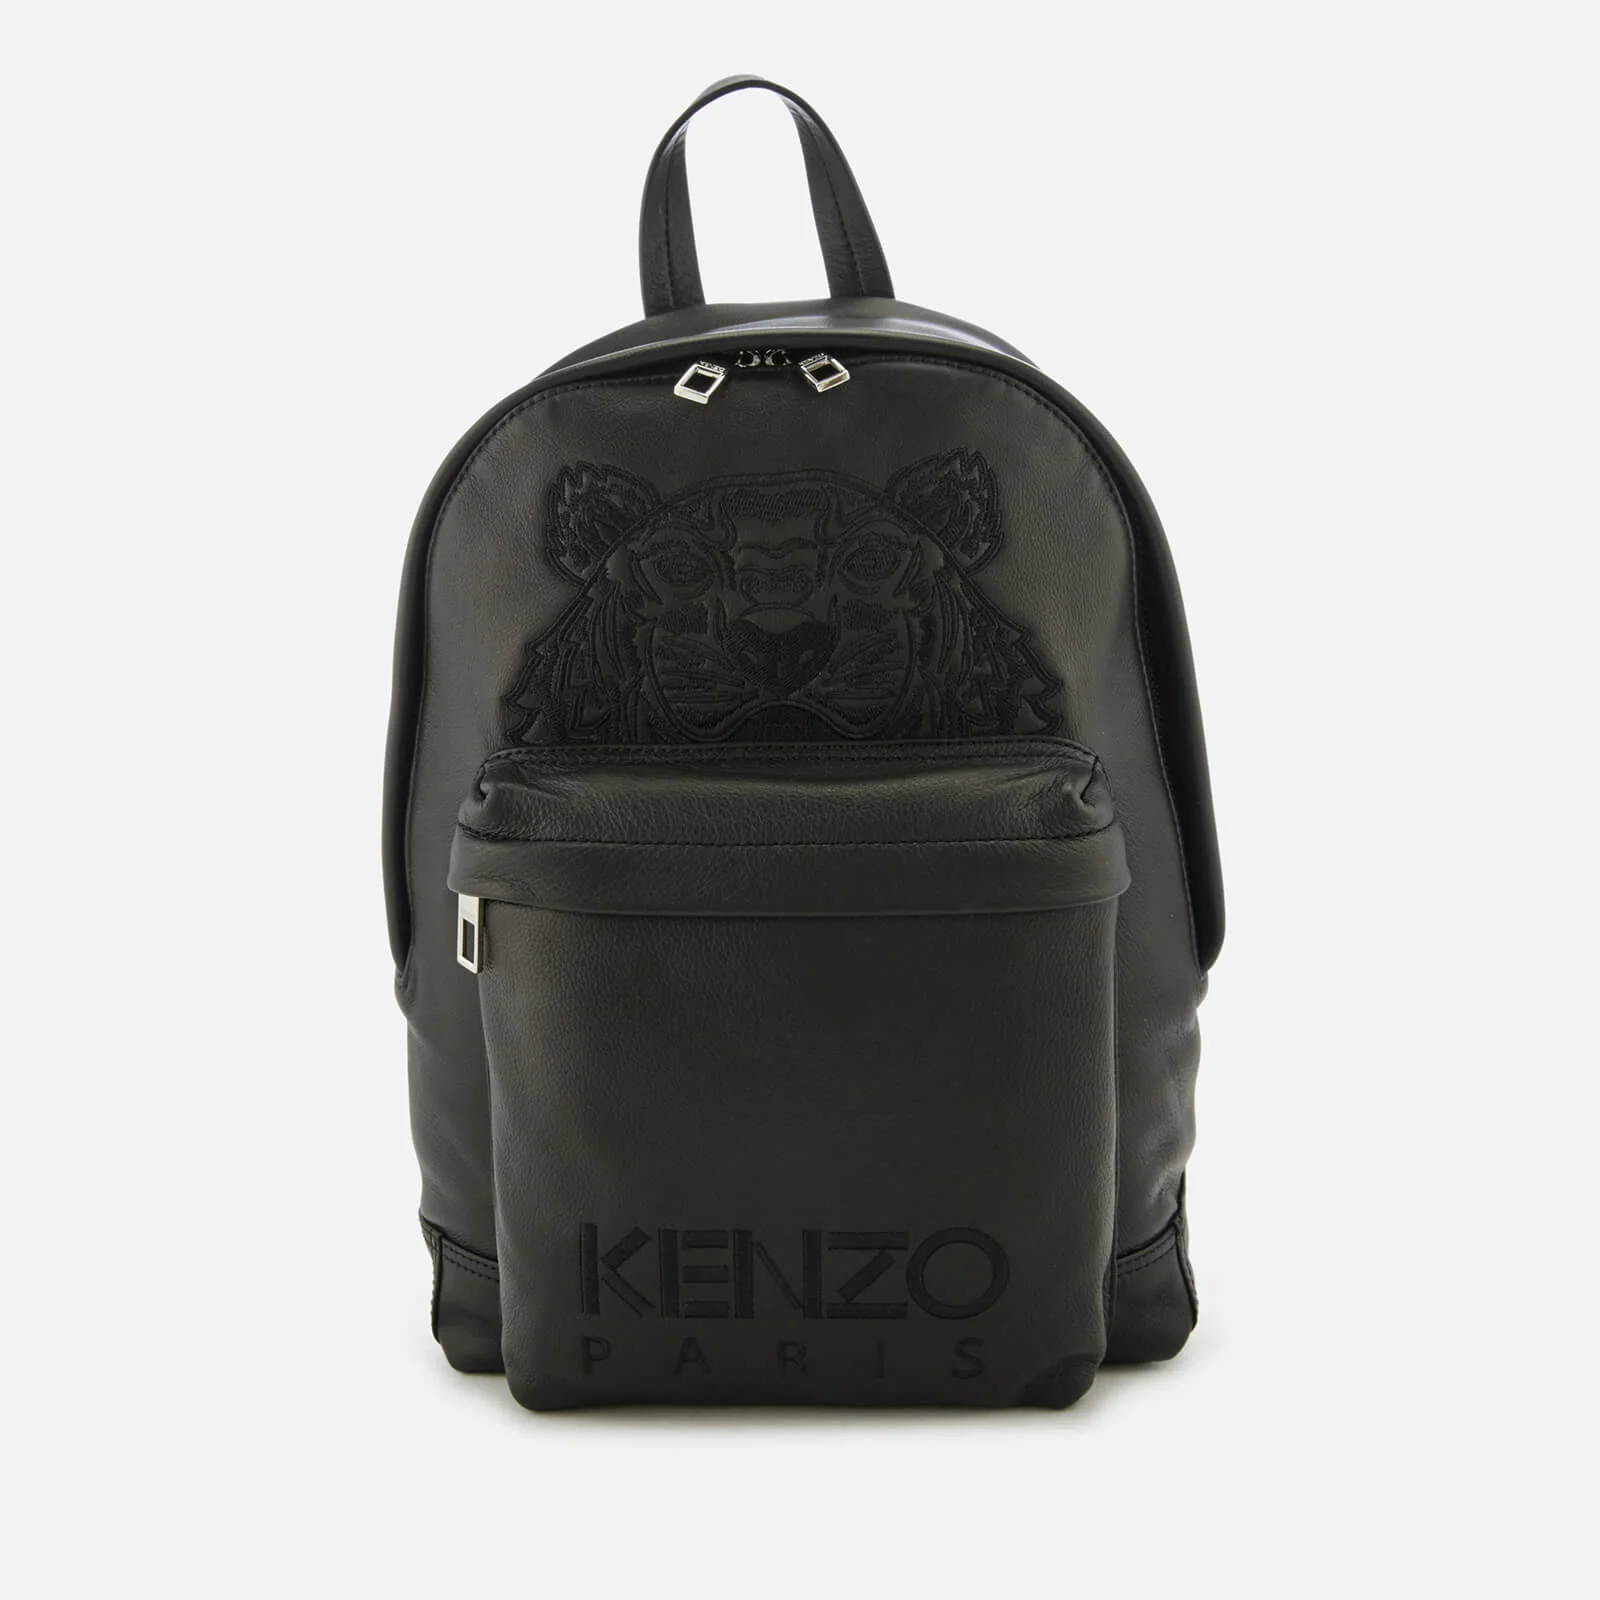 KENZO Women's Small Leather Rucksack - Black Image 1